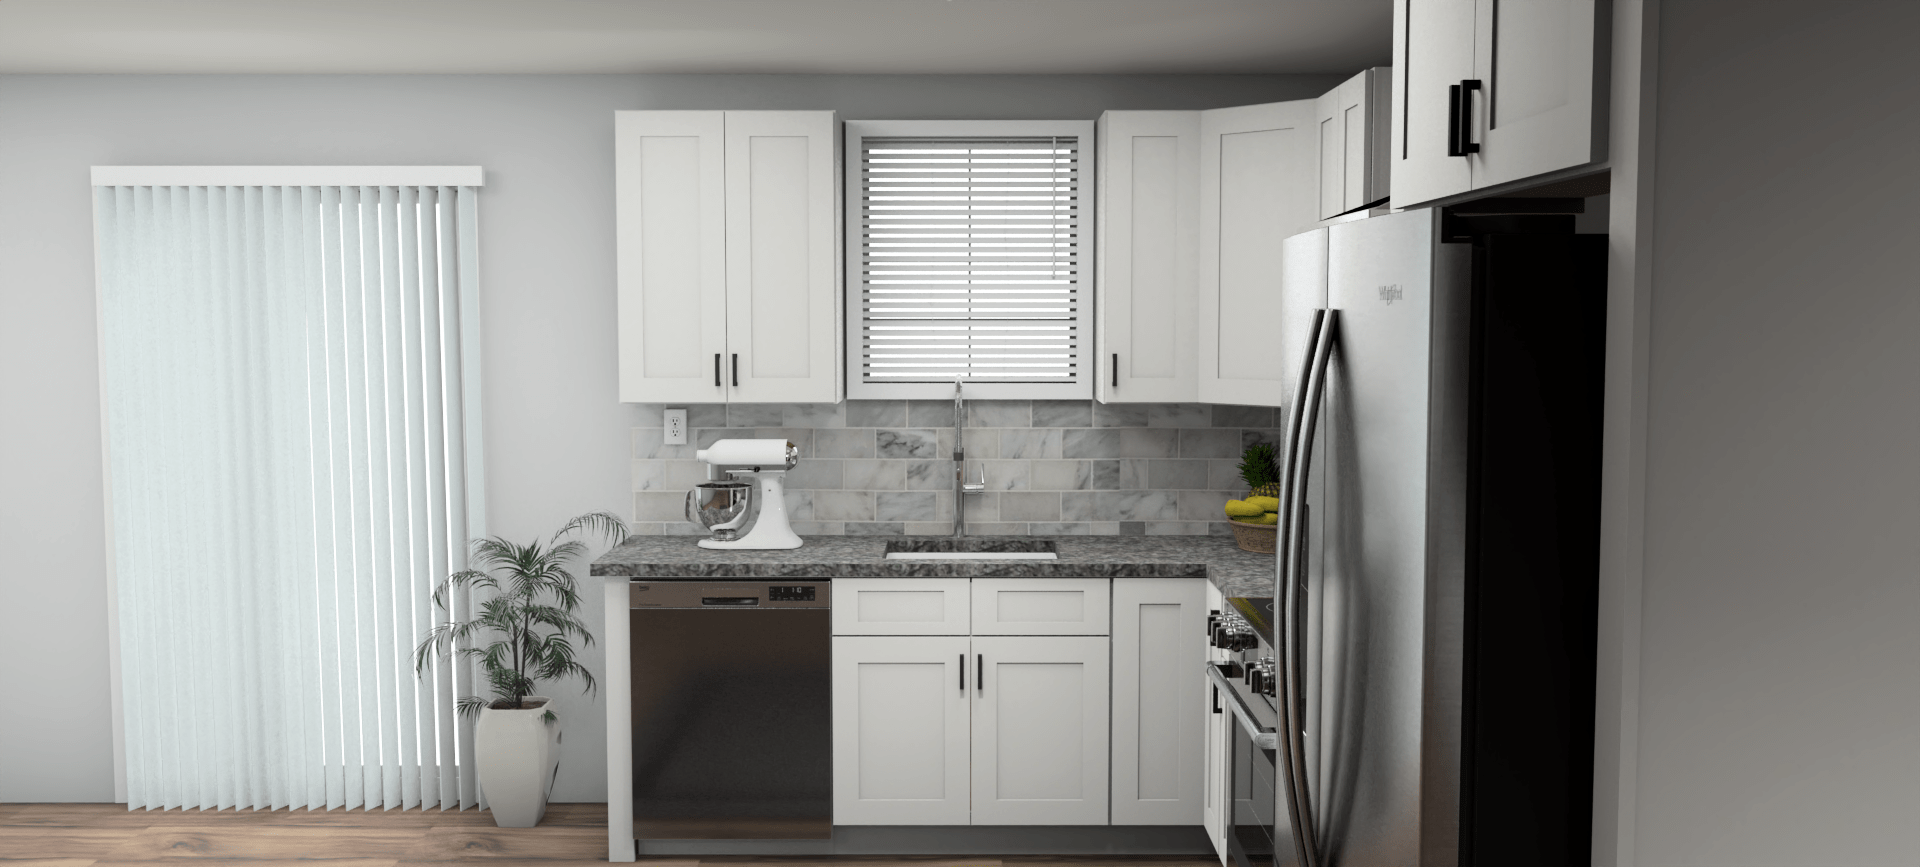 Fabuwood Allure Galaxy Frost 8 x 12 L Shaped Kitchen Side Layout Photo